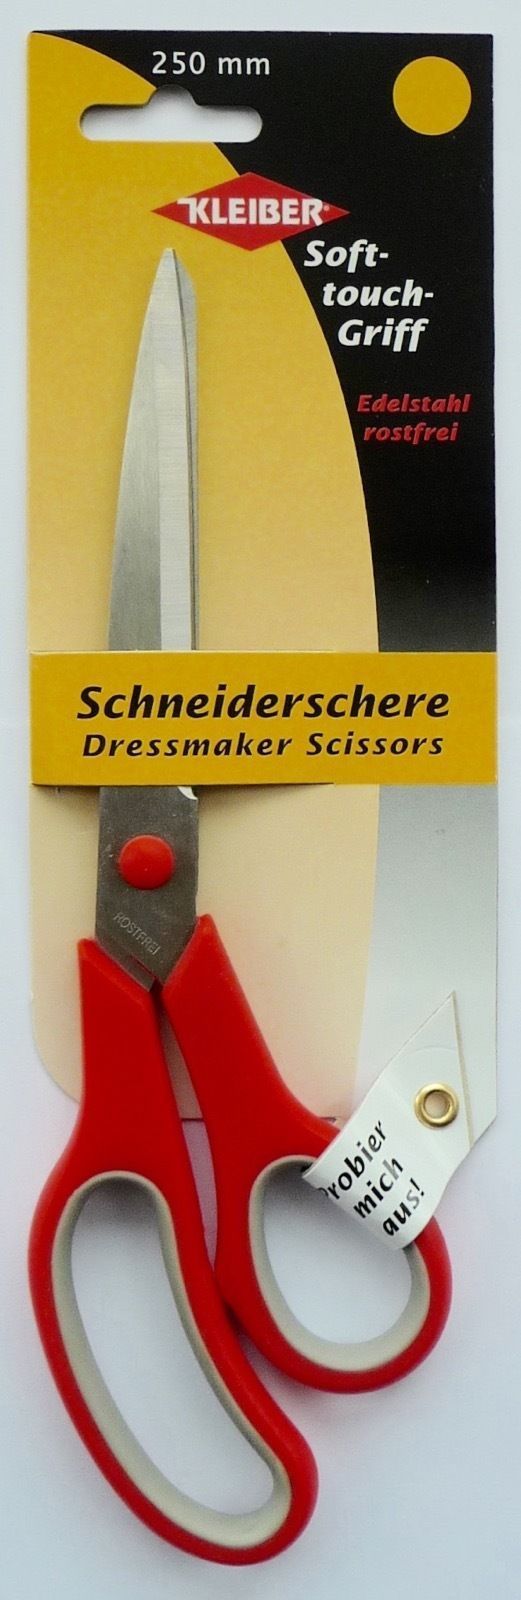 Kleiber Stainless Steel Dressmaking Scissors 250MM / 10